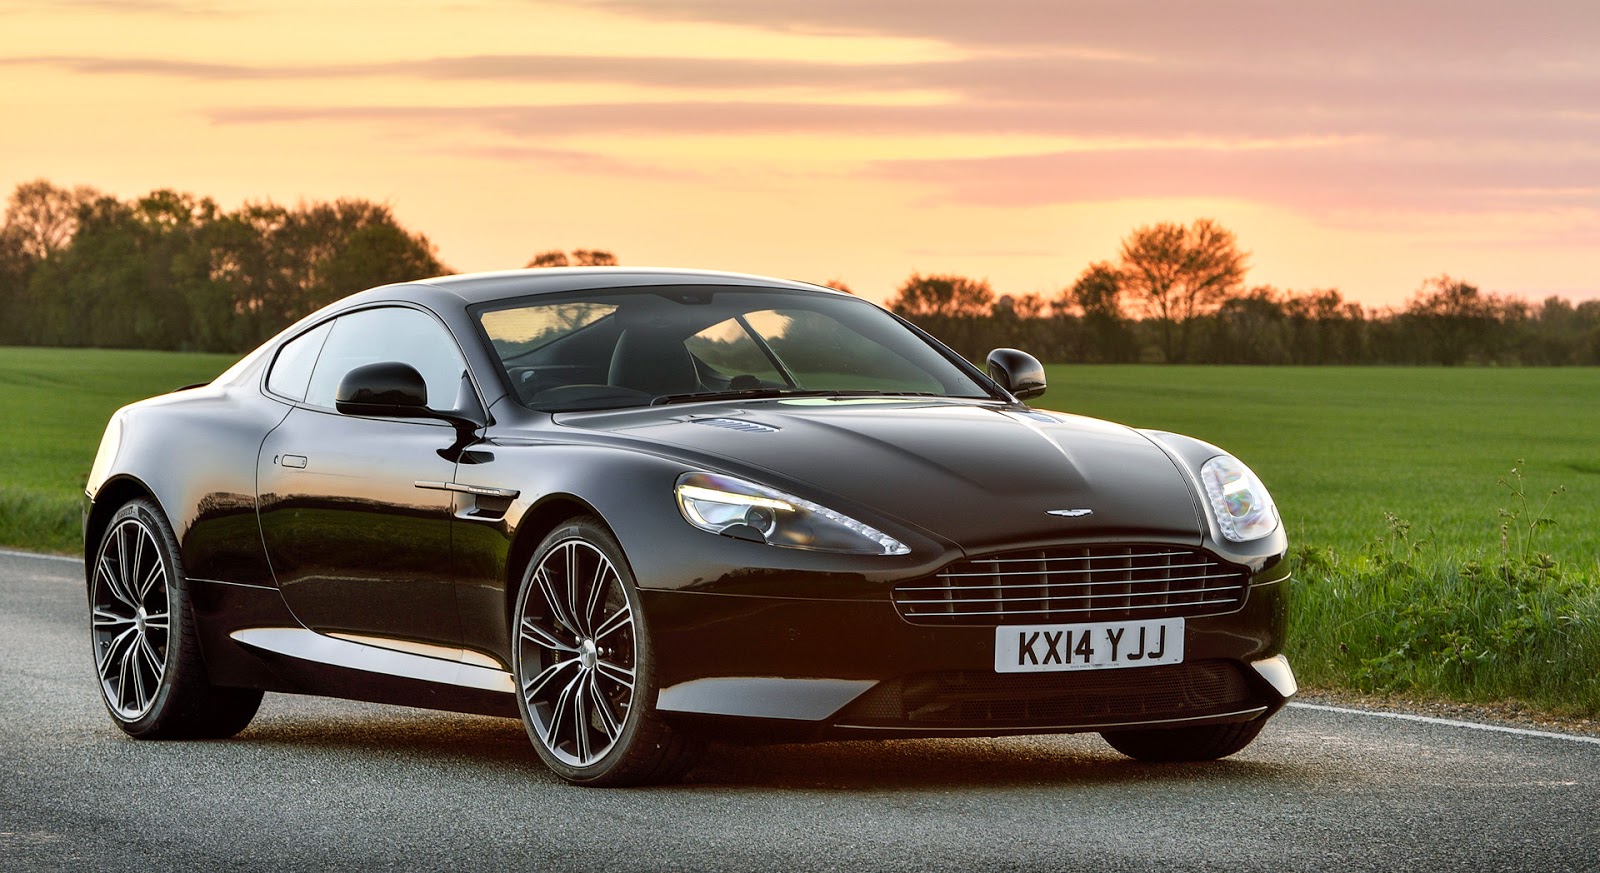 Breathtaking Beauty: The Aston Martin DB9 Carbon Edition